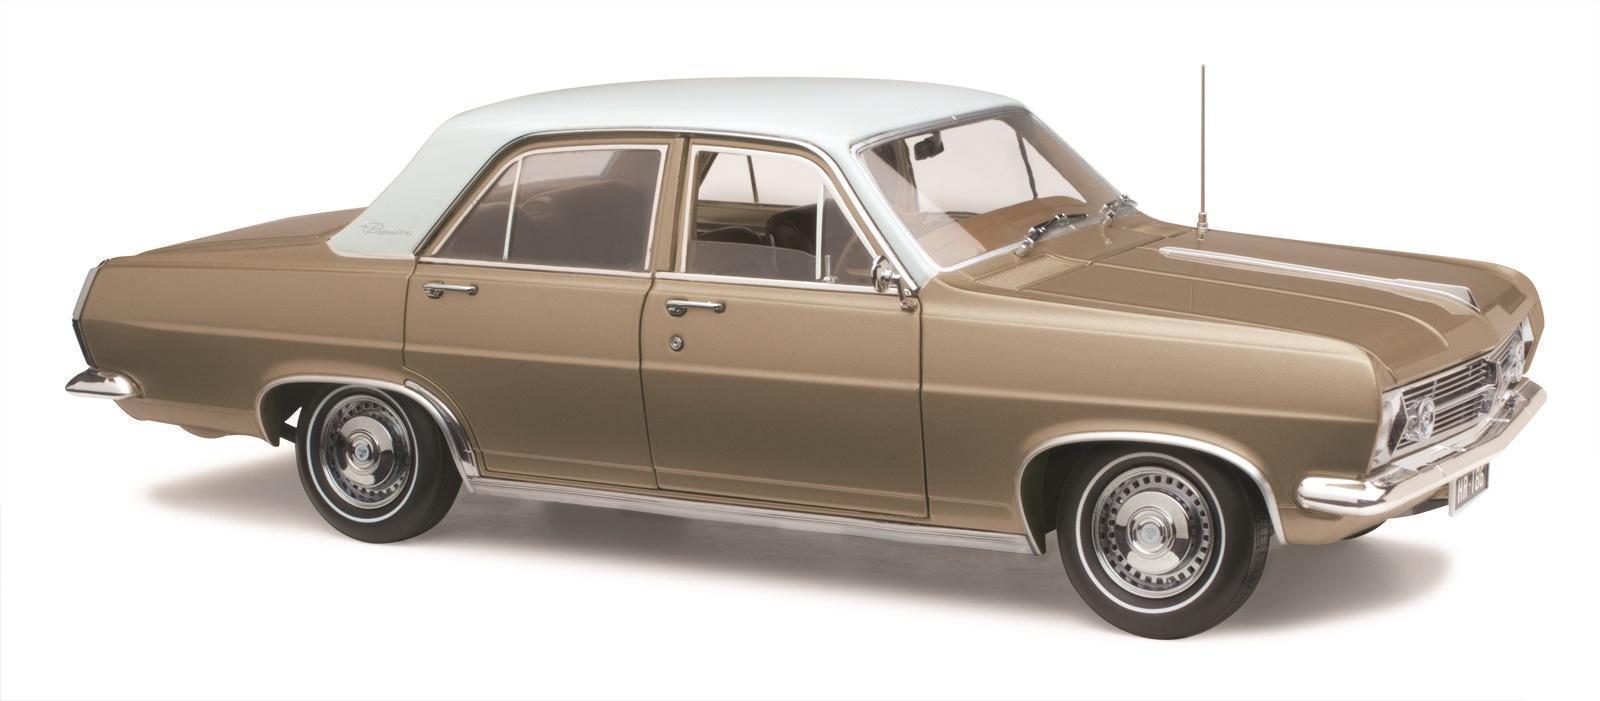 PRE ORDER - 1966 Holden HR Premier Sedan Landale Gold Metallic 50 Year Anniversary Edition Die Cast Model Car 1:18